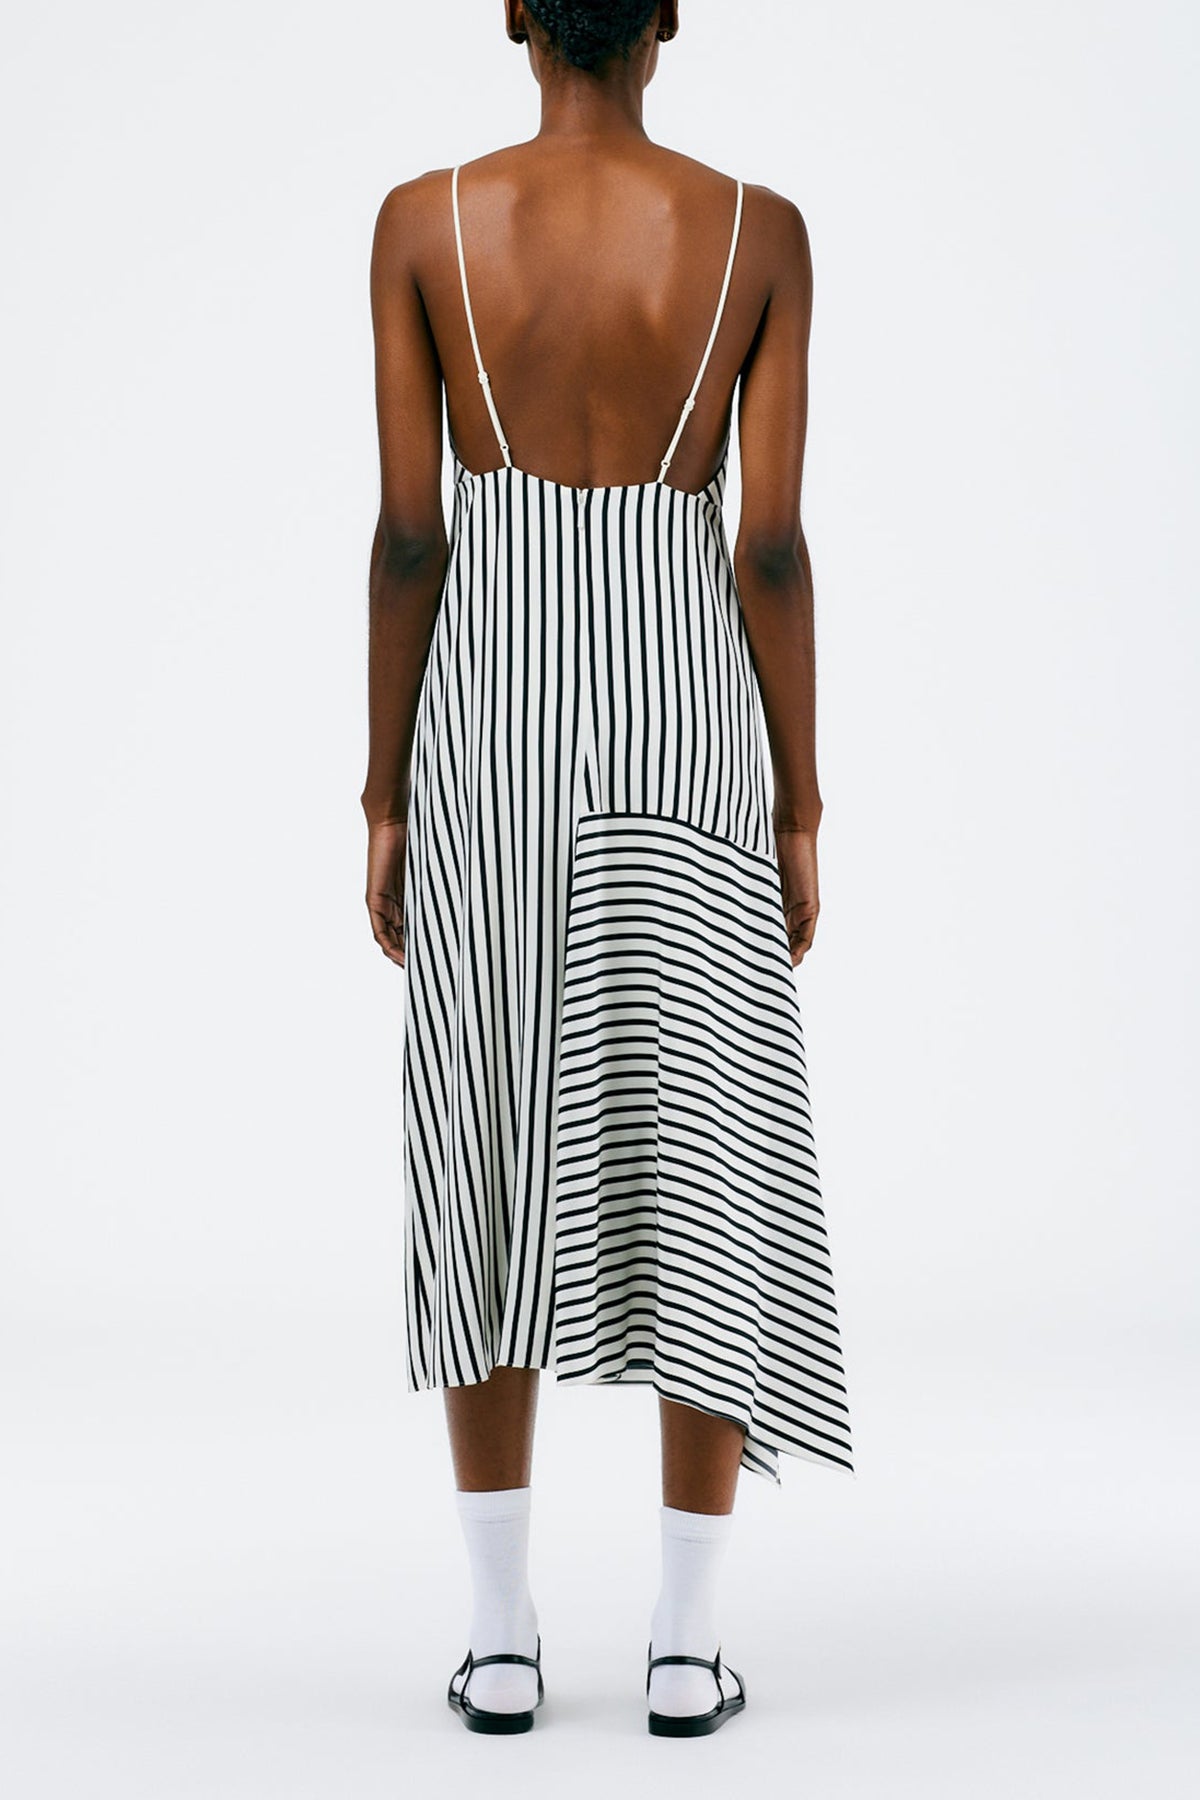 Identity Stripe Cami Dress in Black Multi - shop-olivia.com